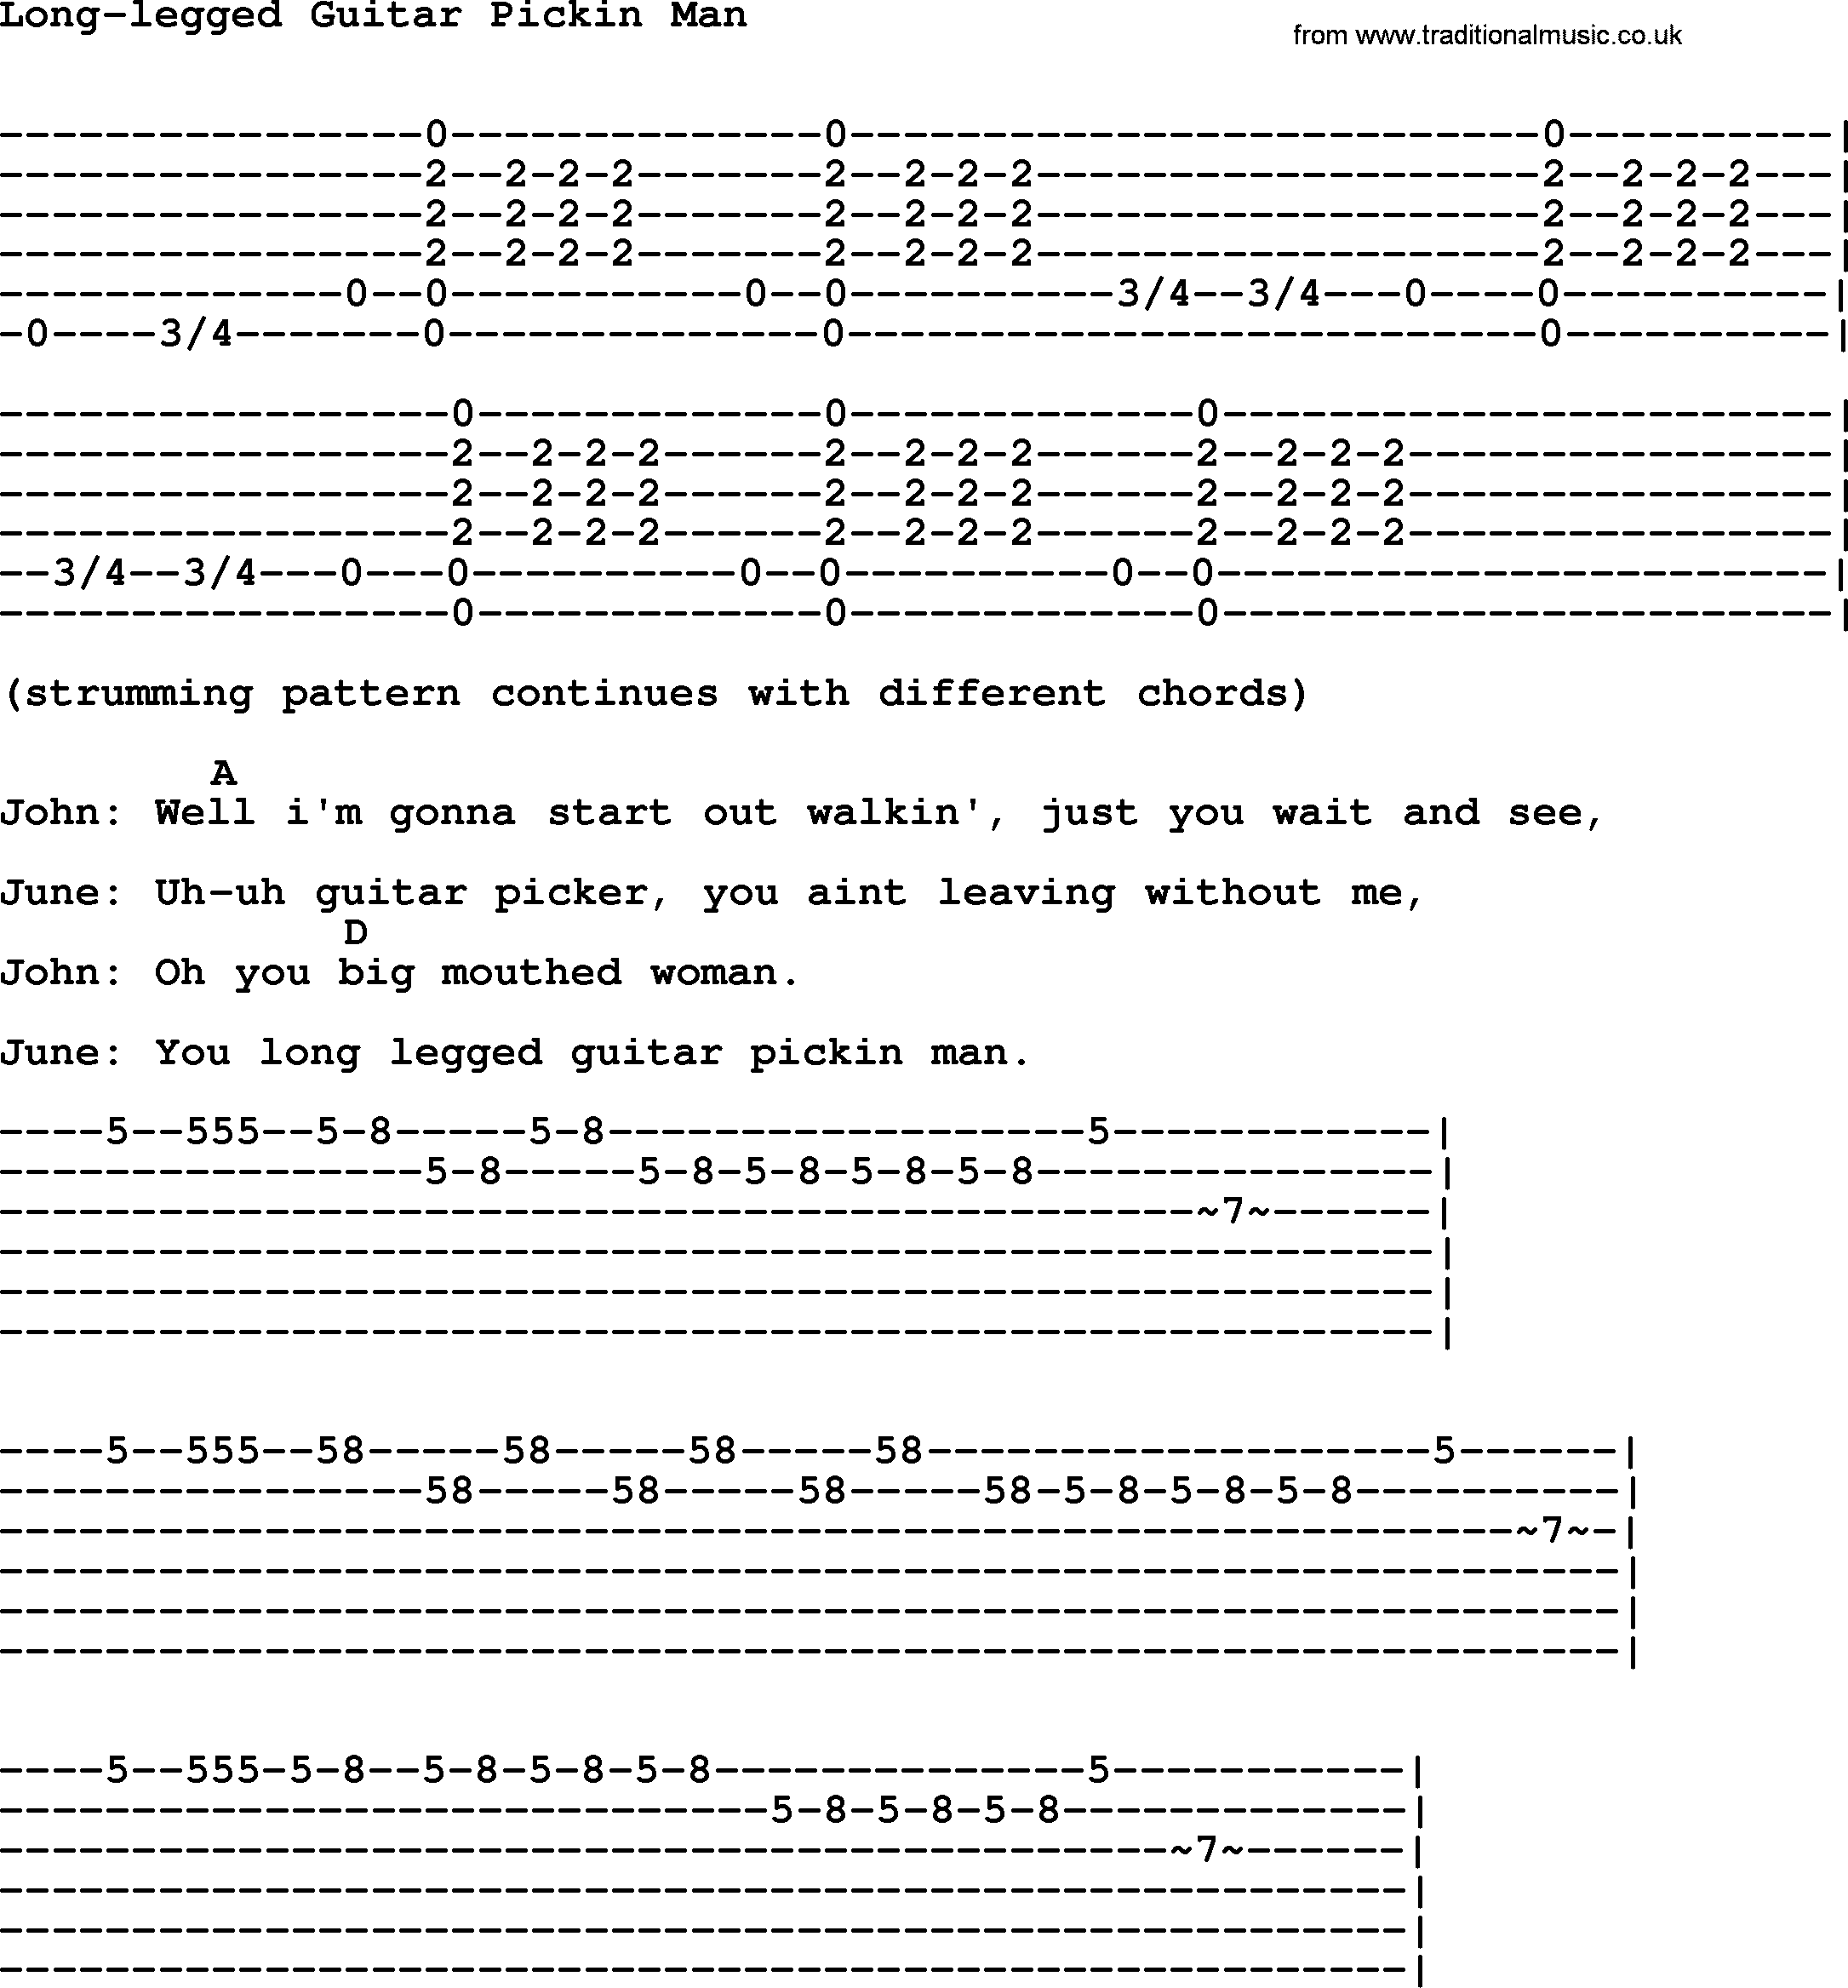 Johnny Cash song Long-legged Guitar Pickin Man, lyrics and chords